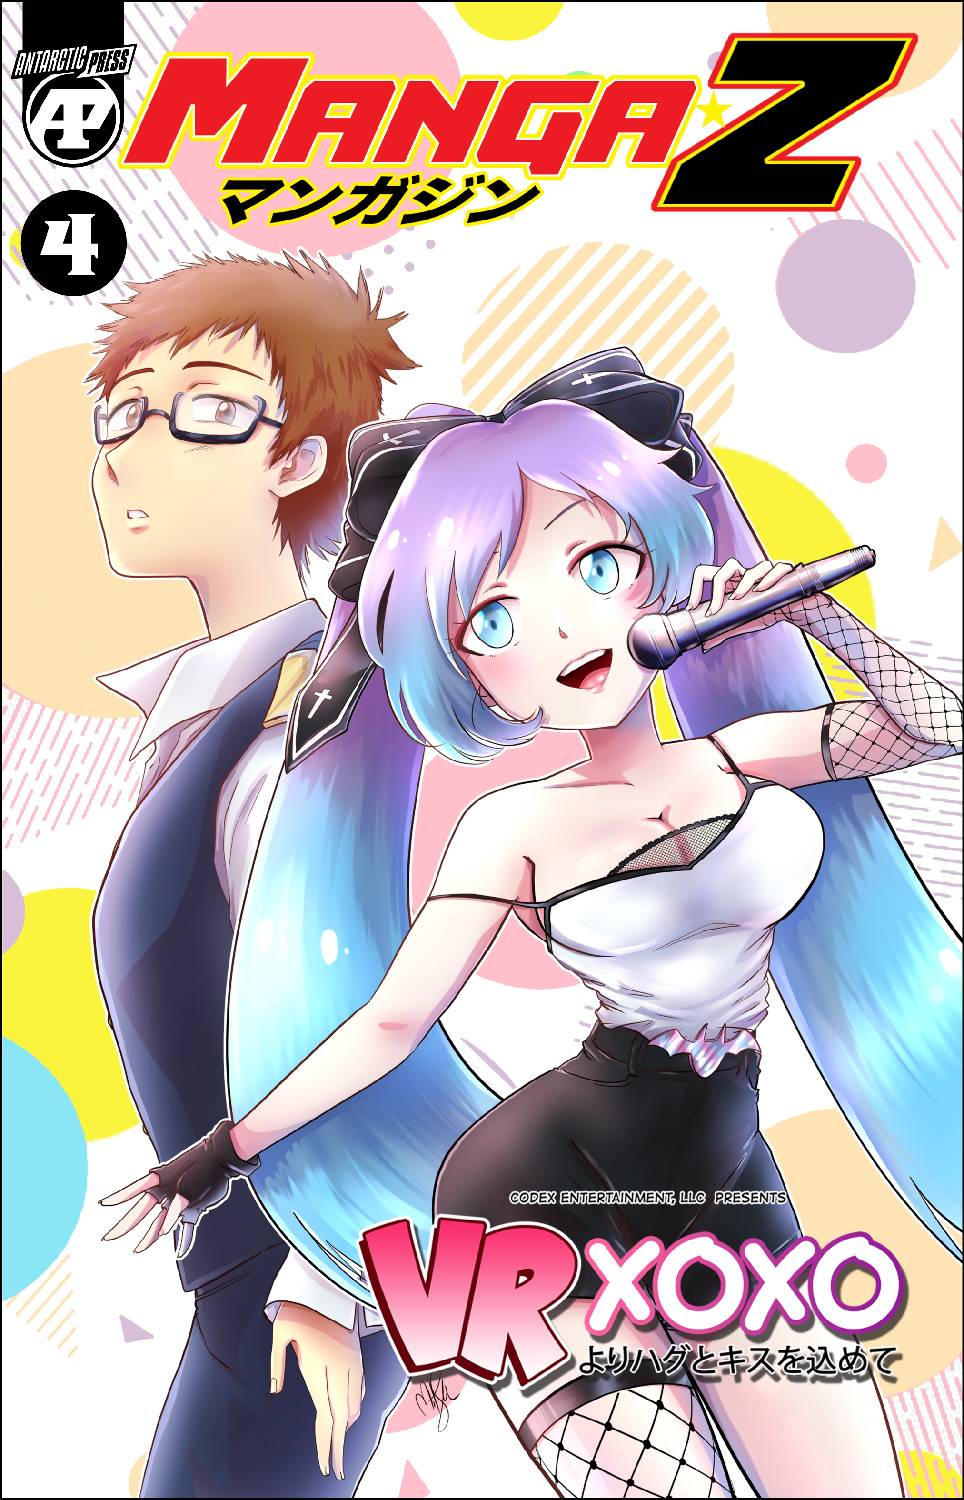 Manga Z no. 4 (2022 Series)